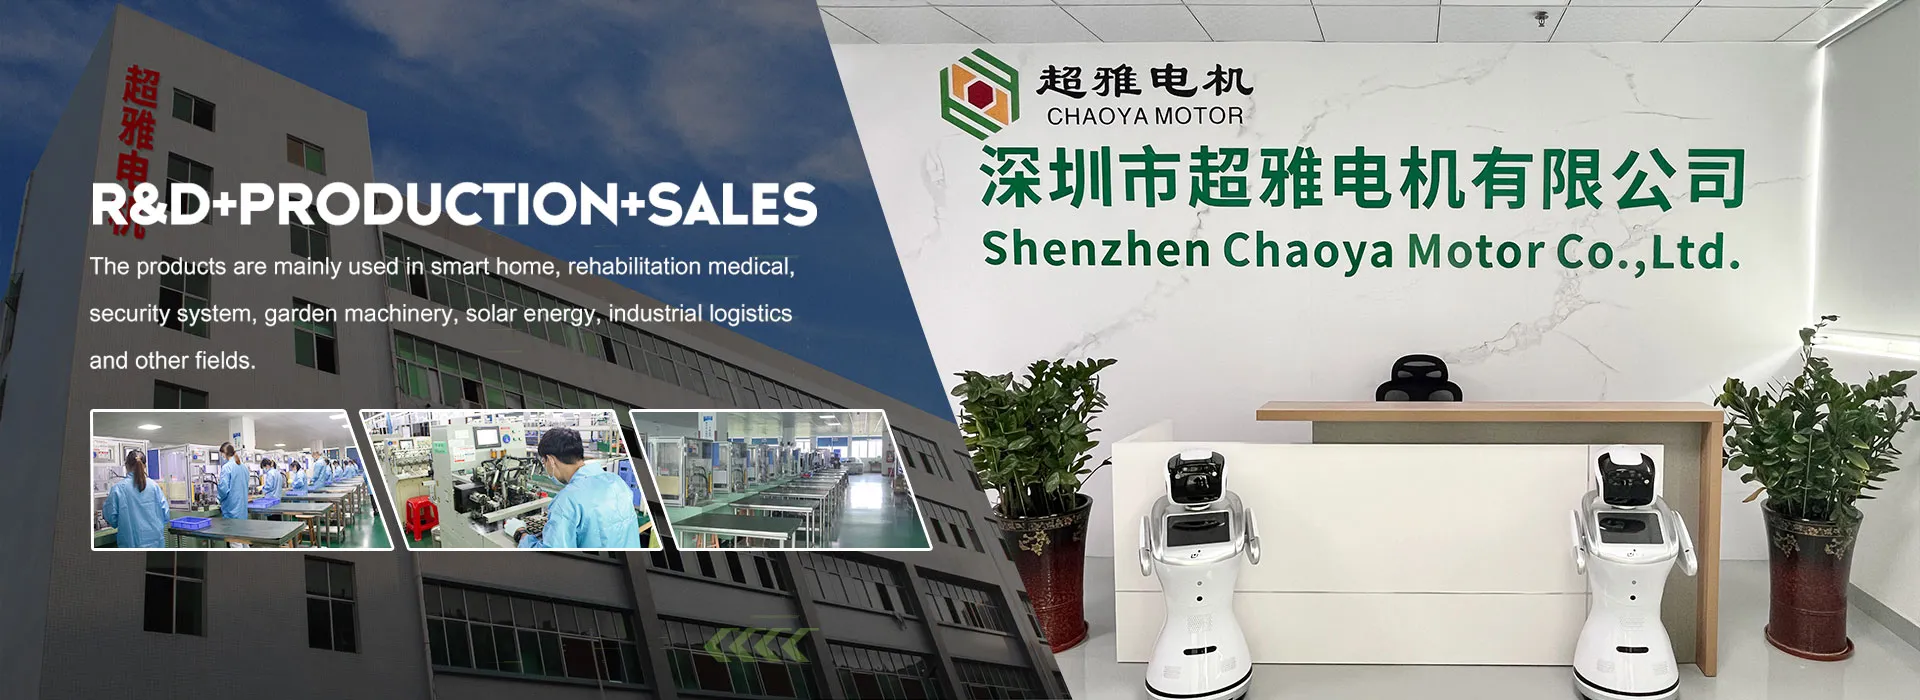 Shenzhen Chaoya Motor Co., Ltd